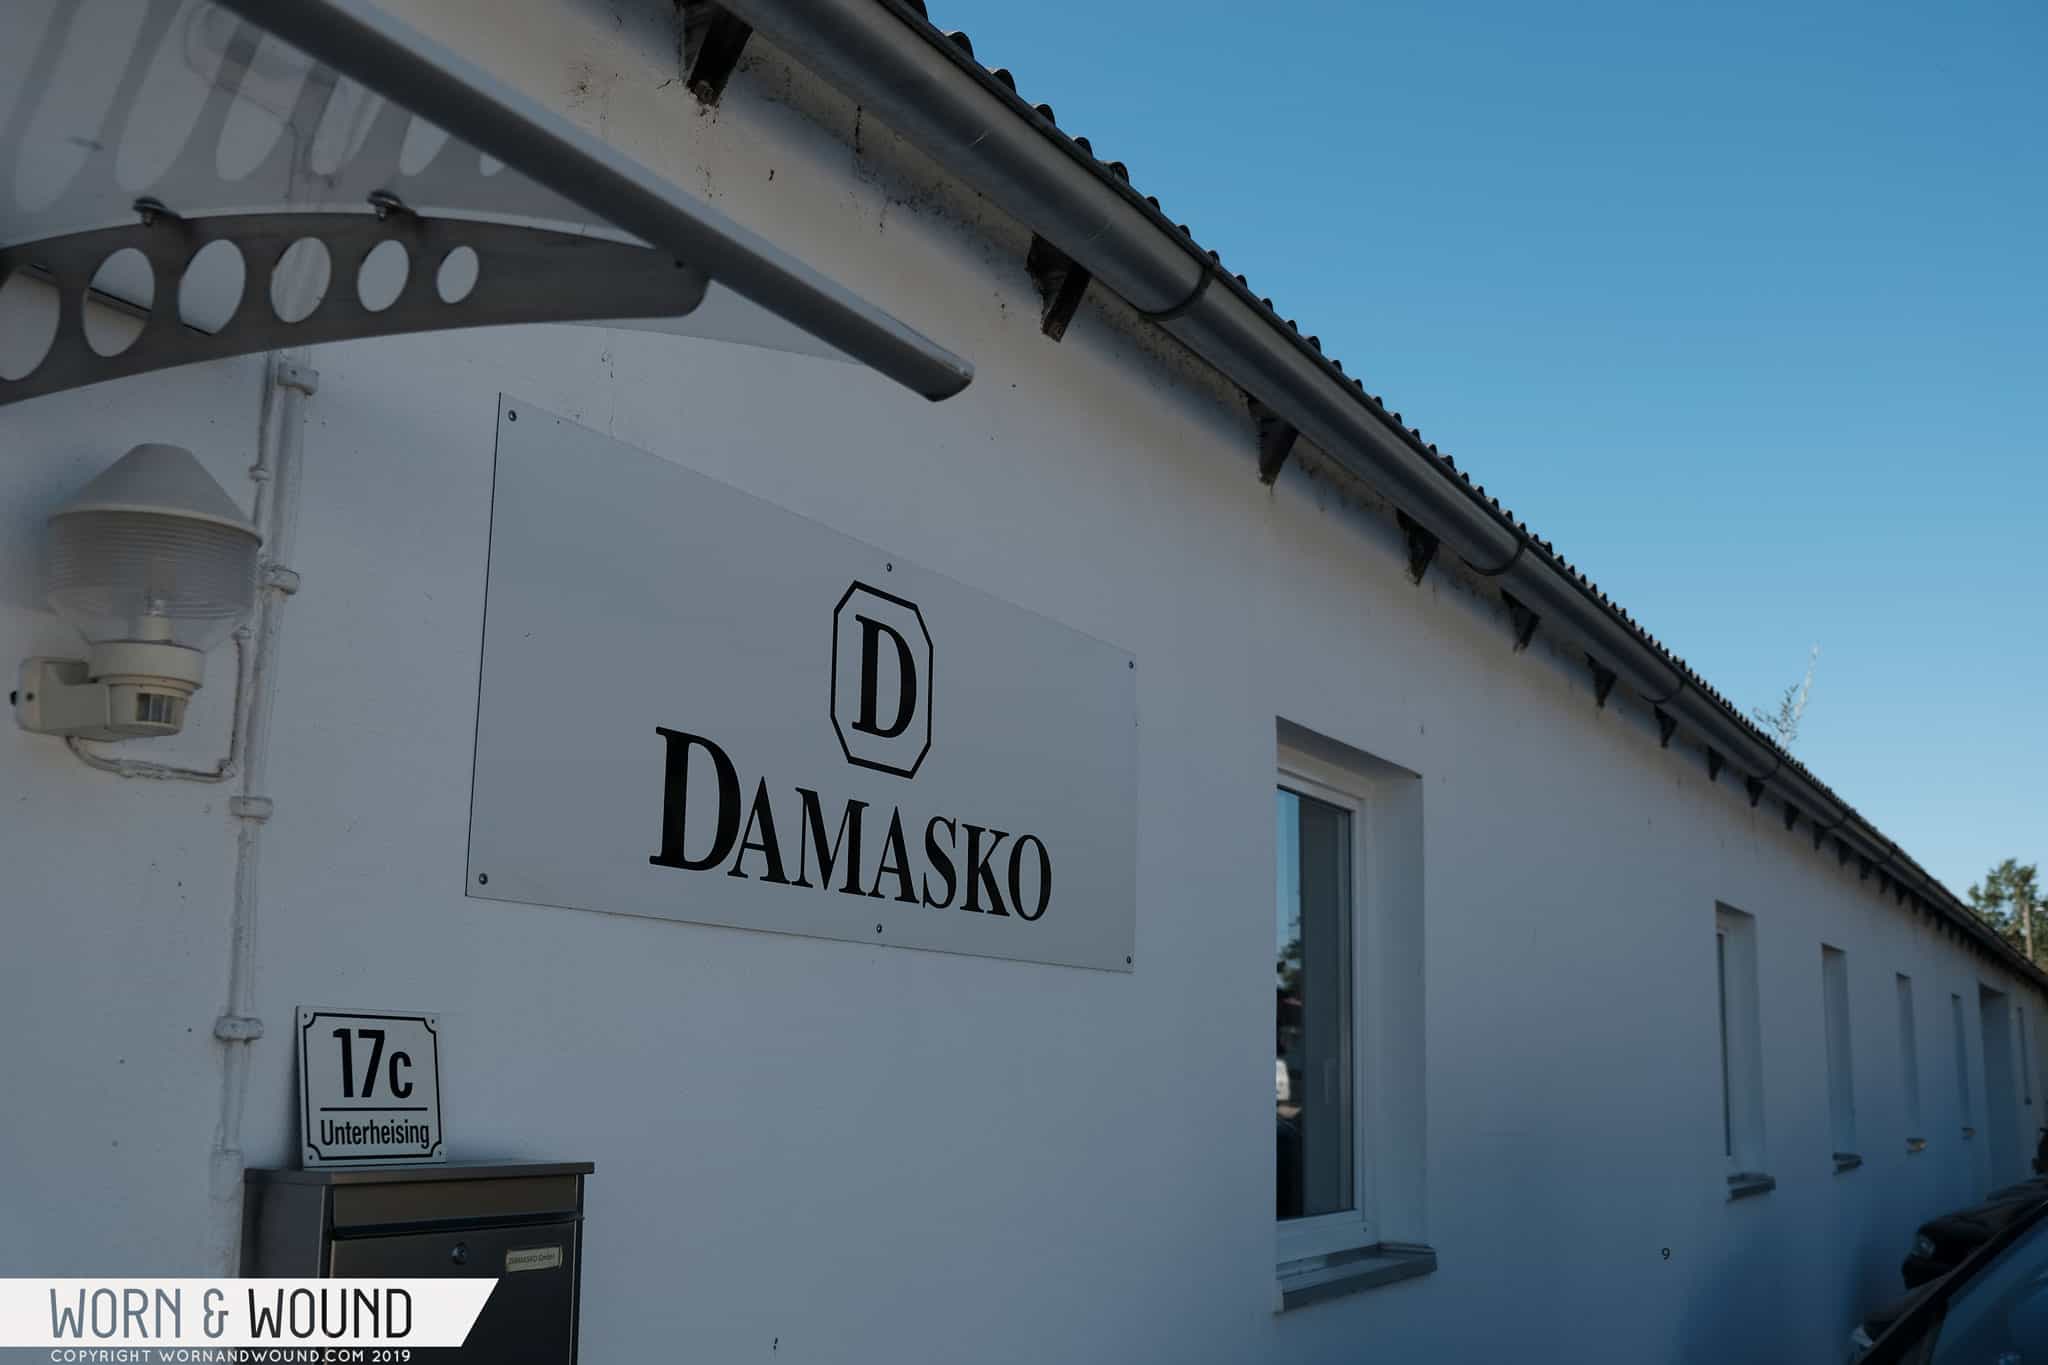 Damasko: A Look Inside the Manufacture